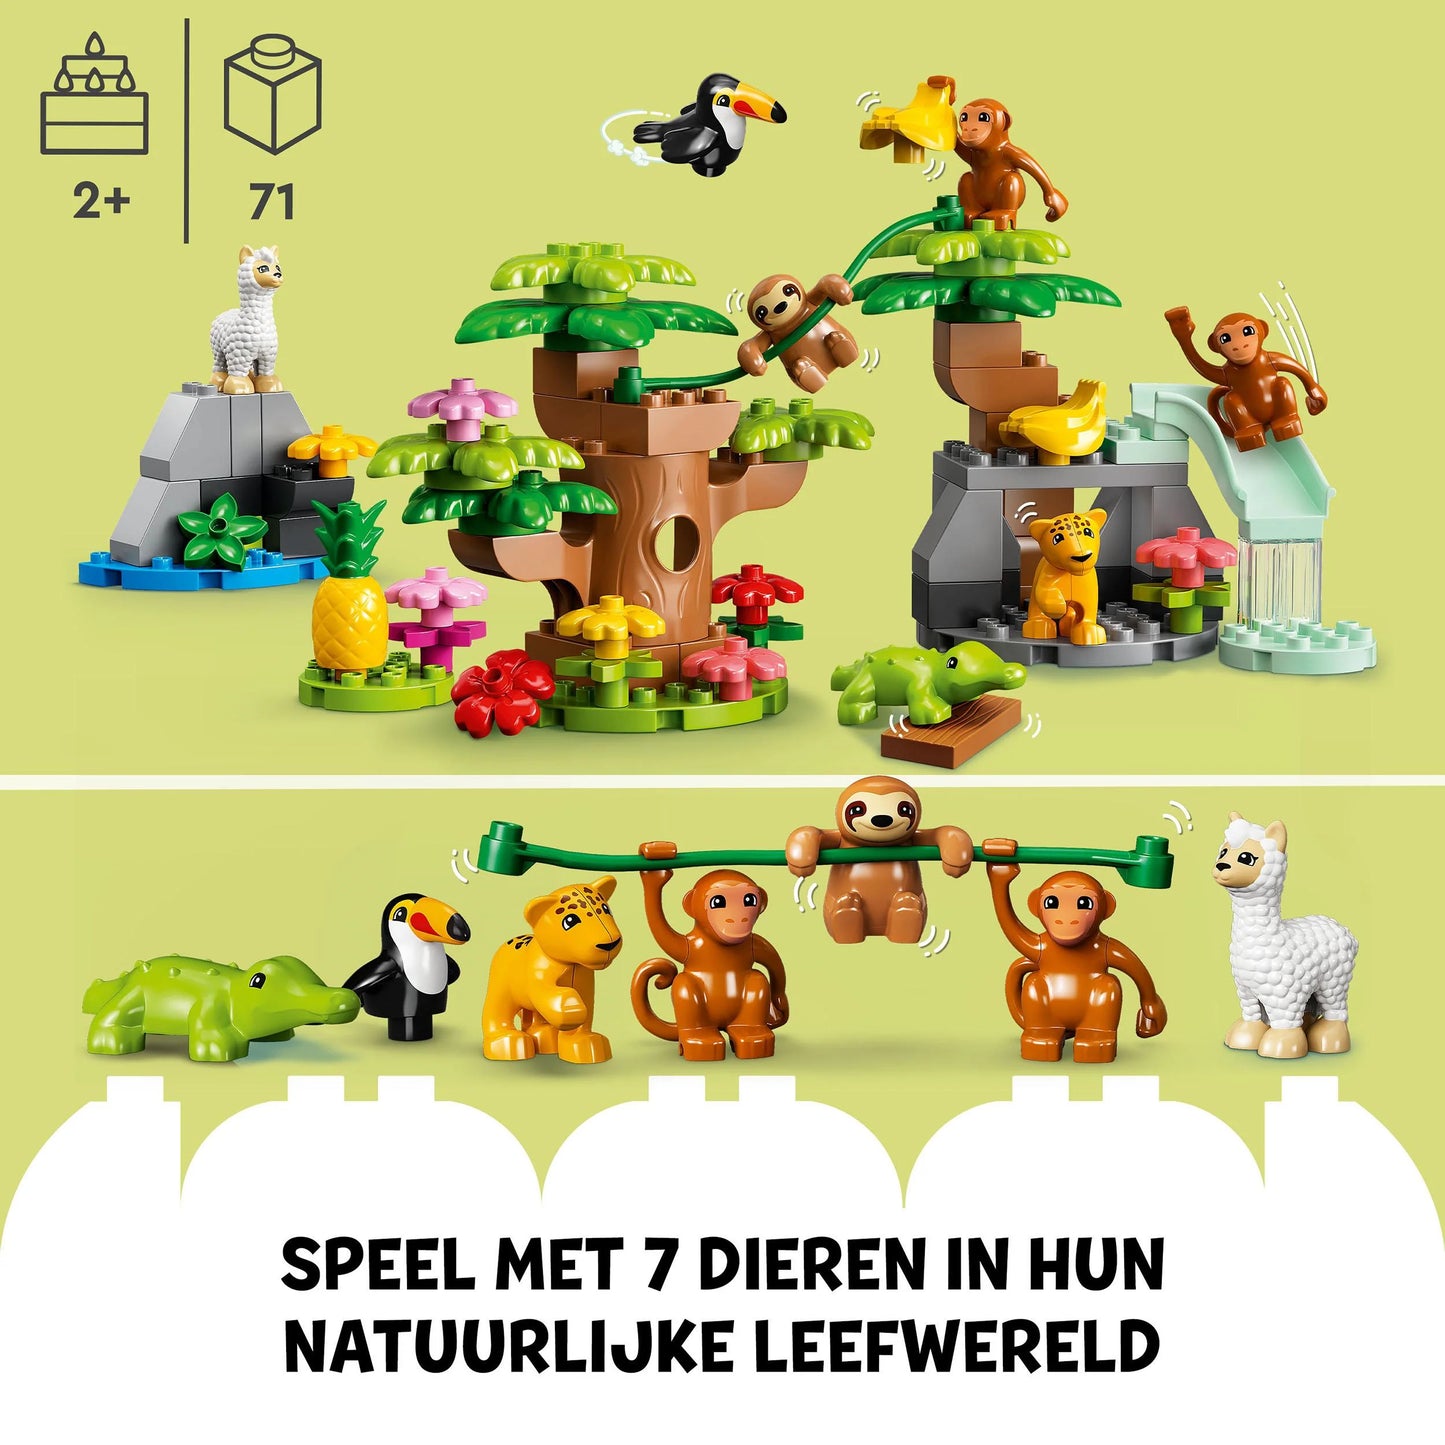 Wild Animals of South America - LEGO Duplo